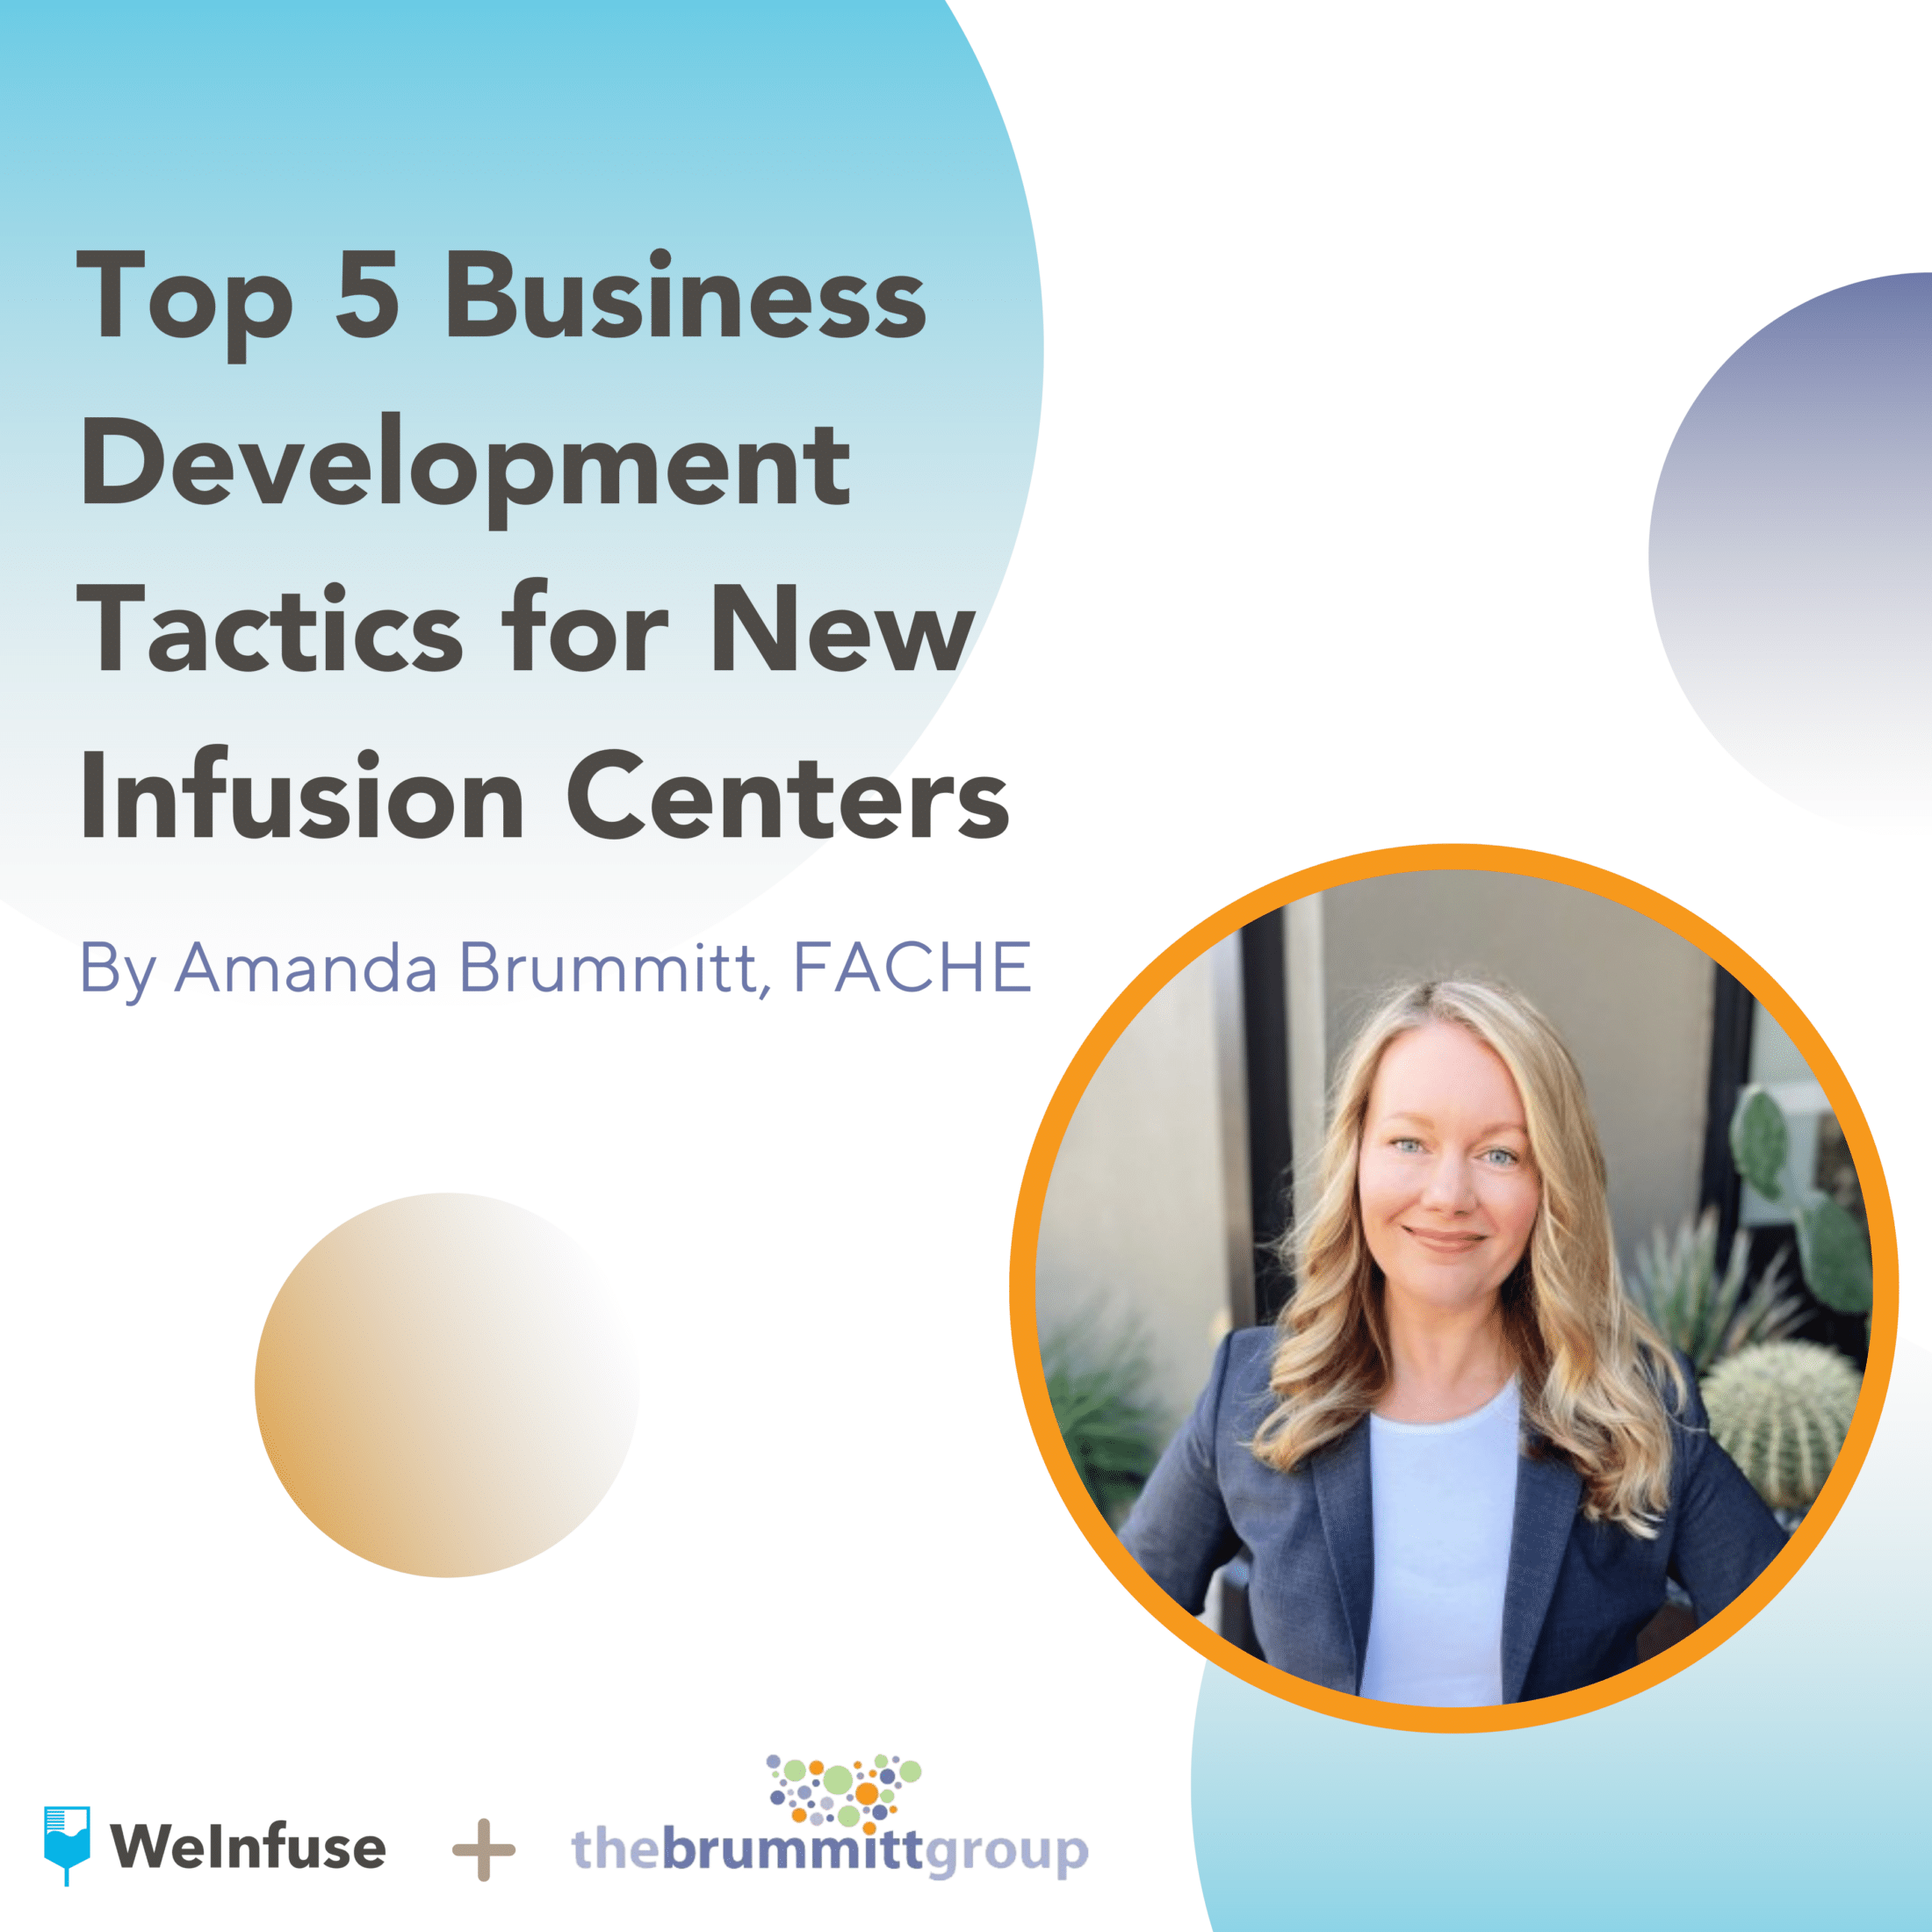 Top 5 Business Development Tactics